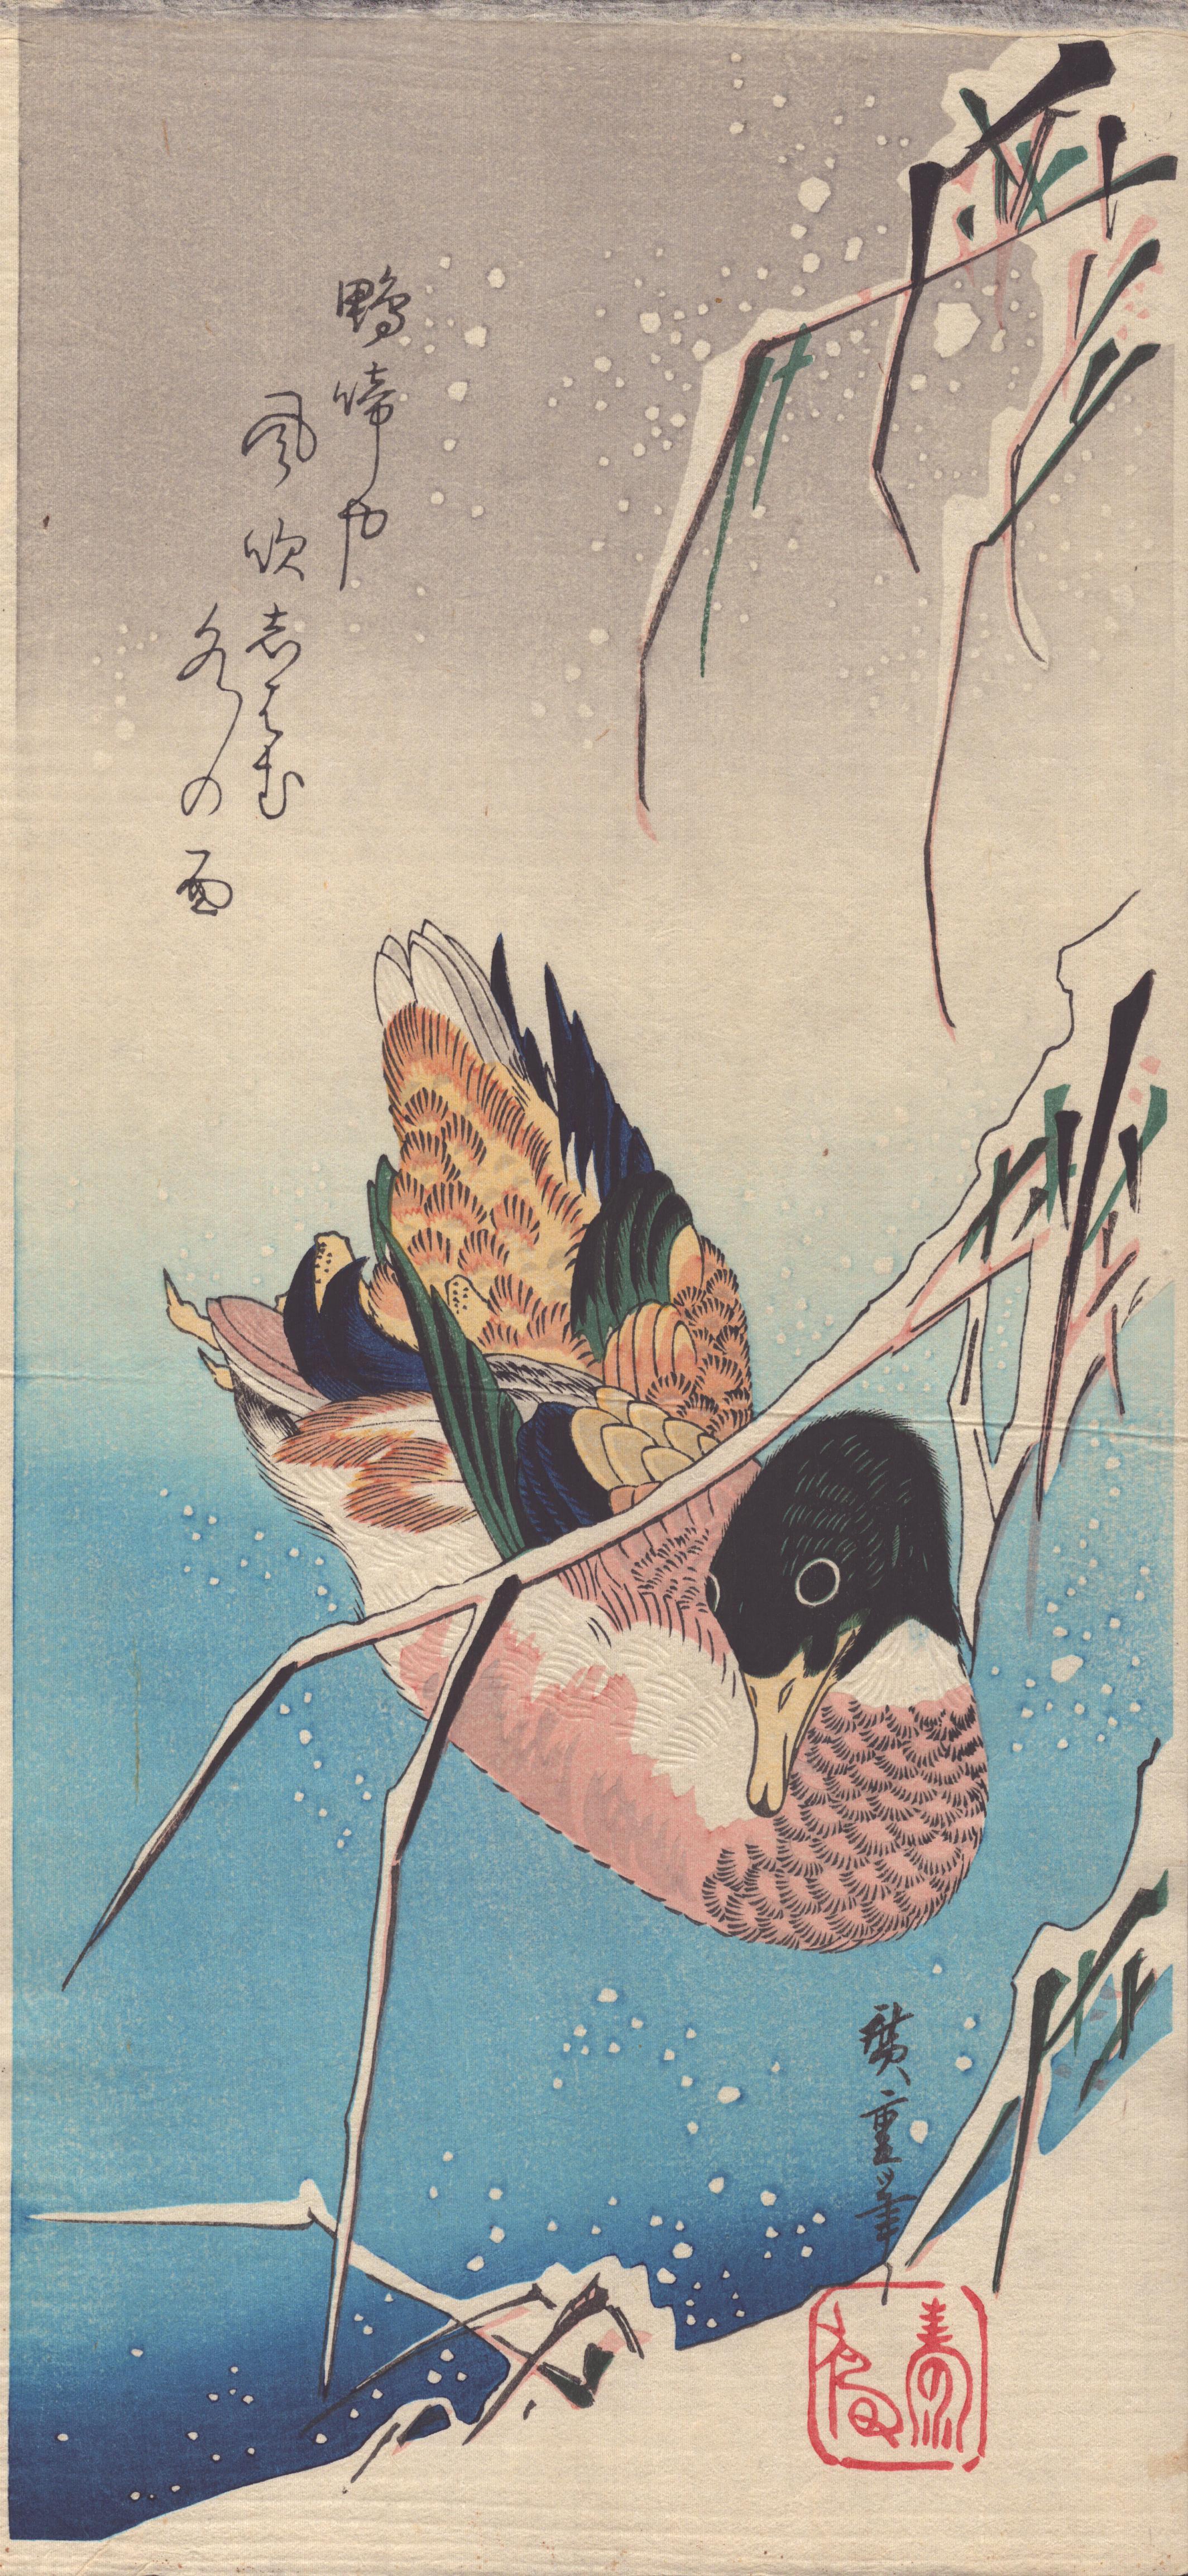 Utagawa Hiroshige (Ando Hiroshige) Animal Print - Hiroshige (1797-1858) - Duck in Snow 雪中芦に鴨 [Reproduction]